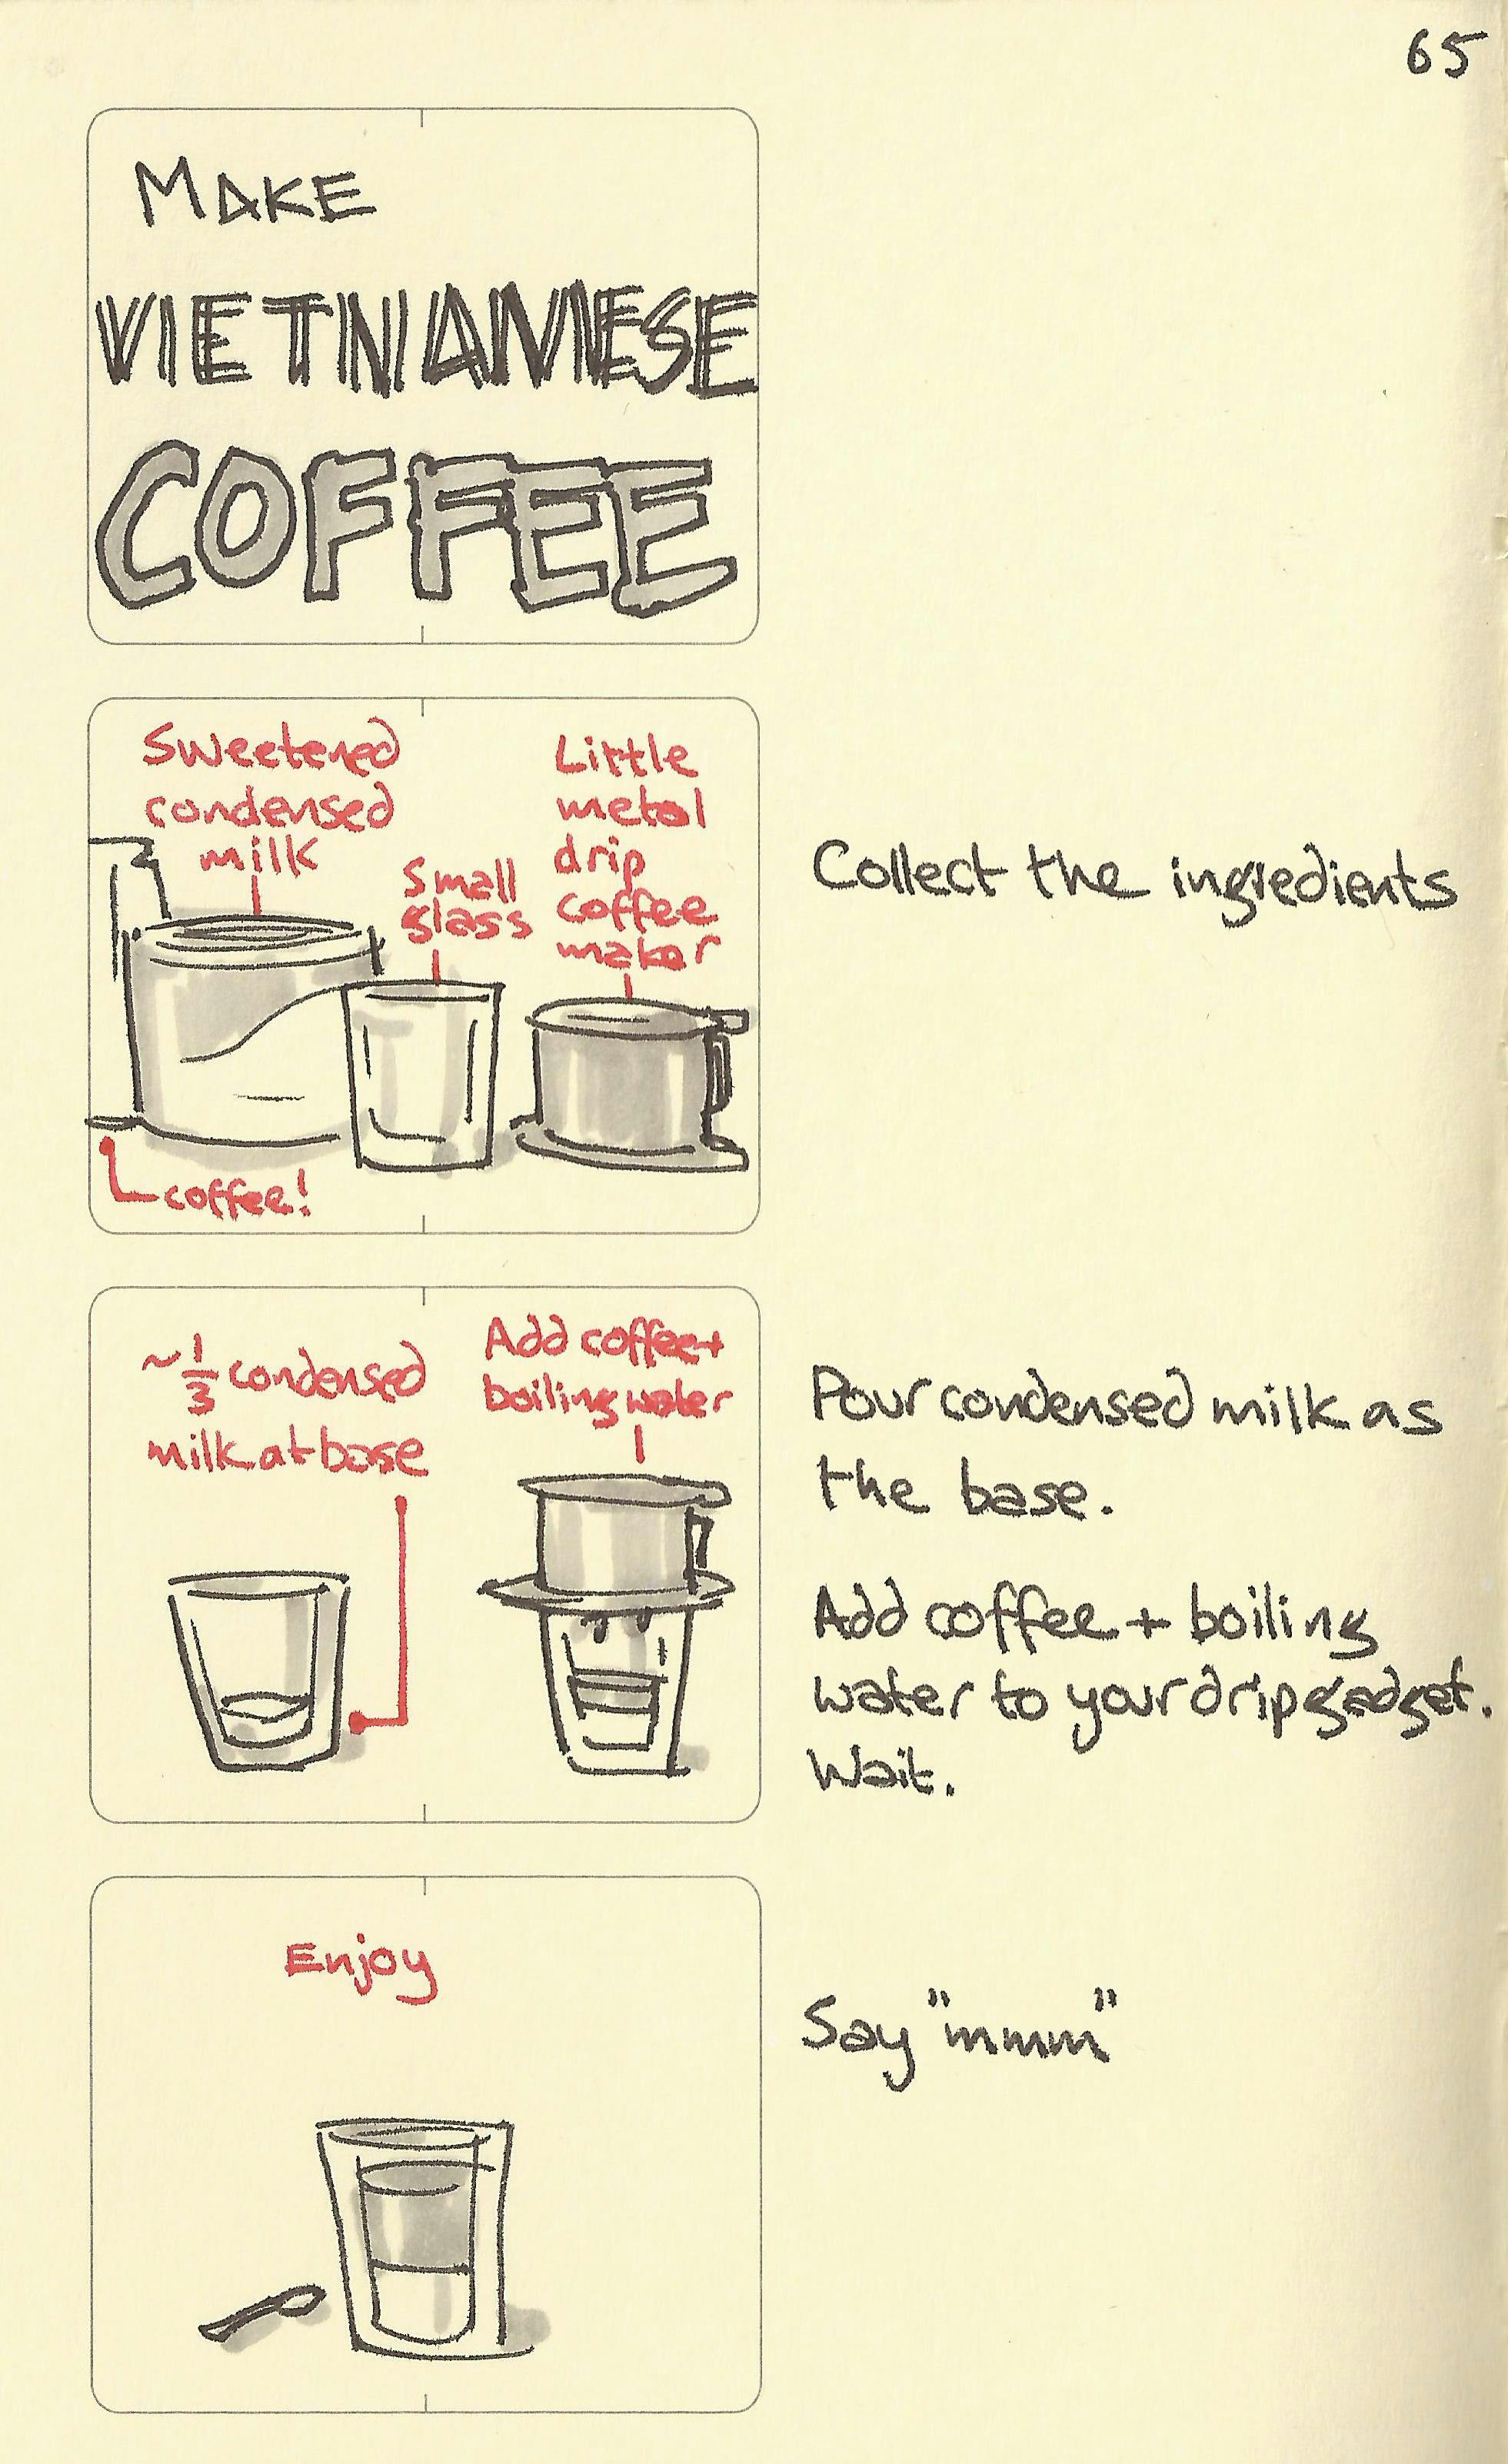 Make Vietnamese coffee - Sketchplanations